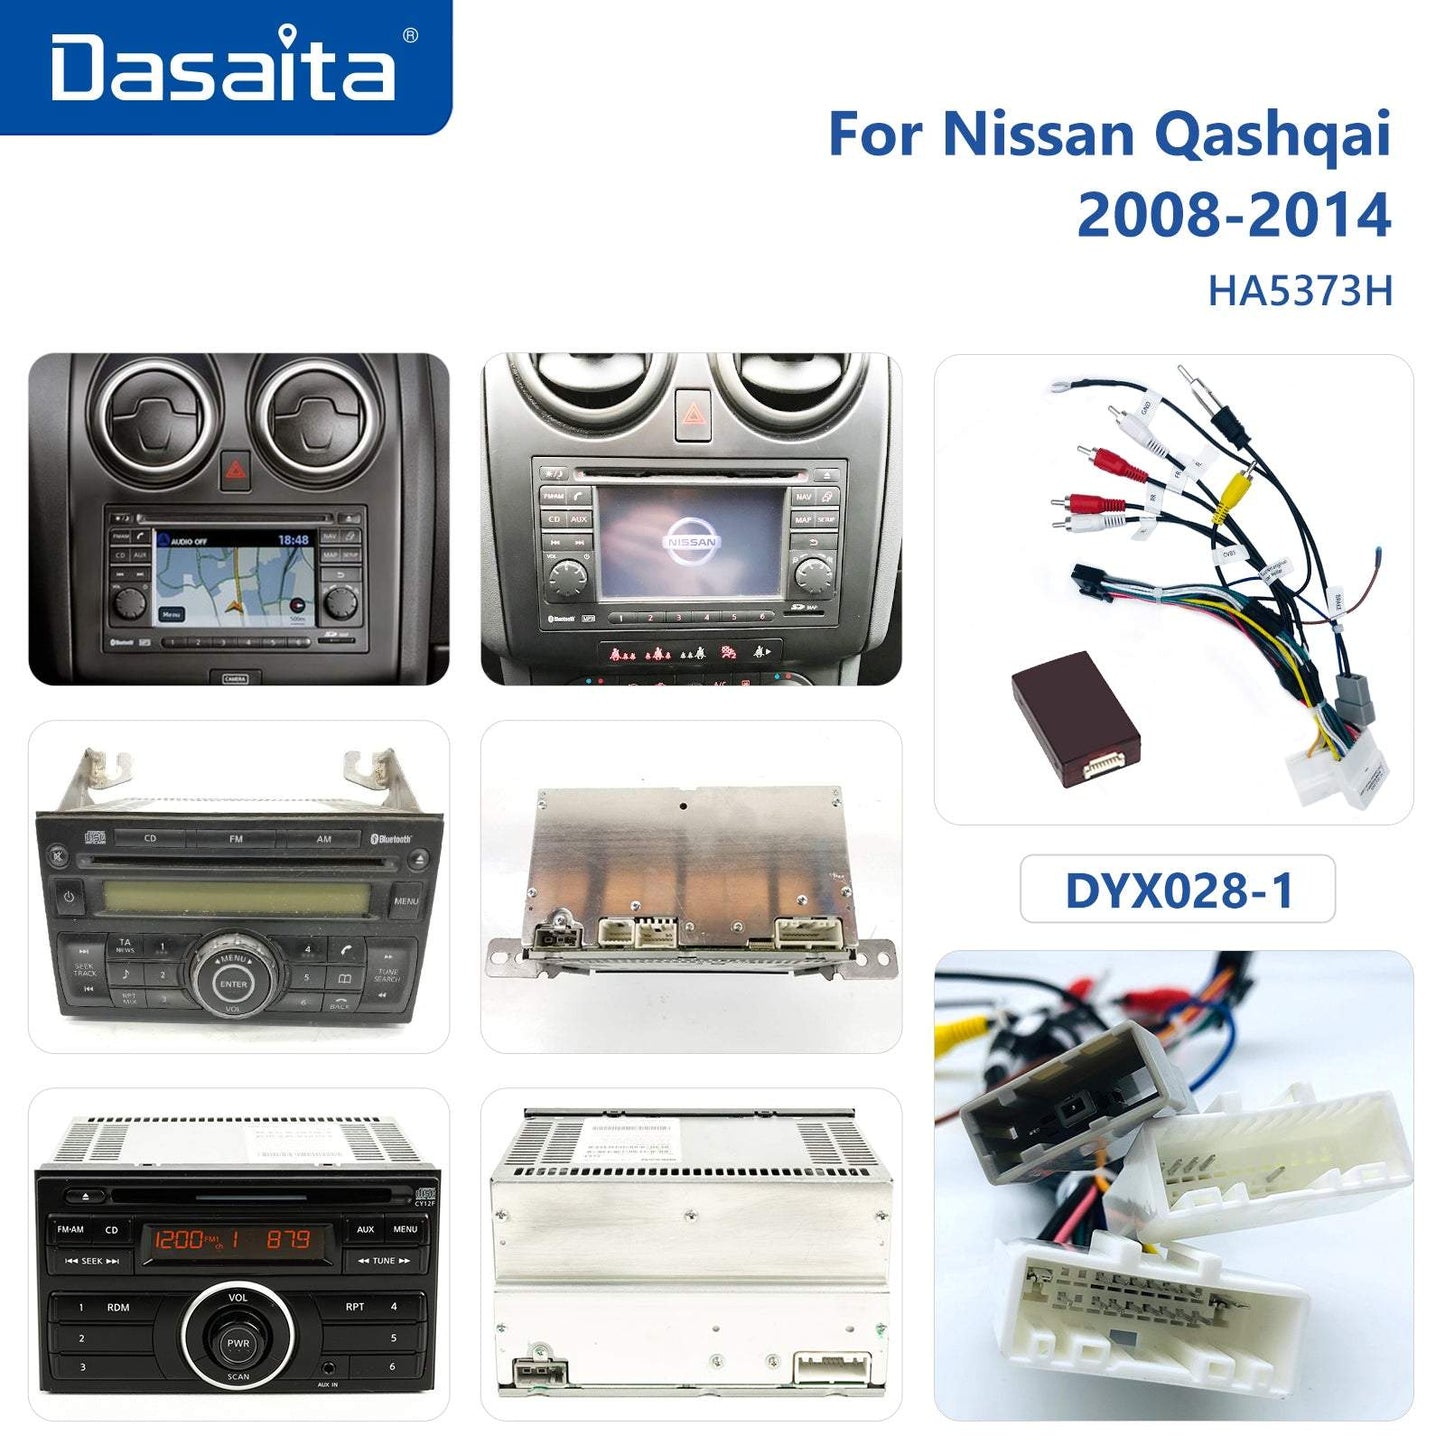 Dasaita MAX10 Nissan Qashqai 2008 2009 2010 2011 2012 2013 2014 Car Stereo 9 Inch Carplay Android Auto PX6 4G+64G Android10 1280*720 DSP AHD Radio